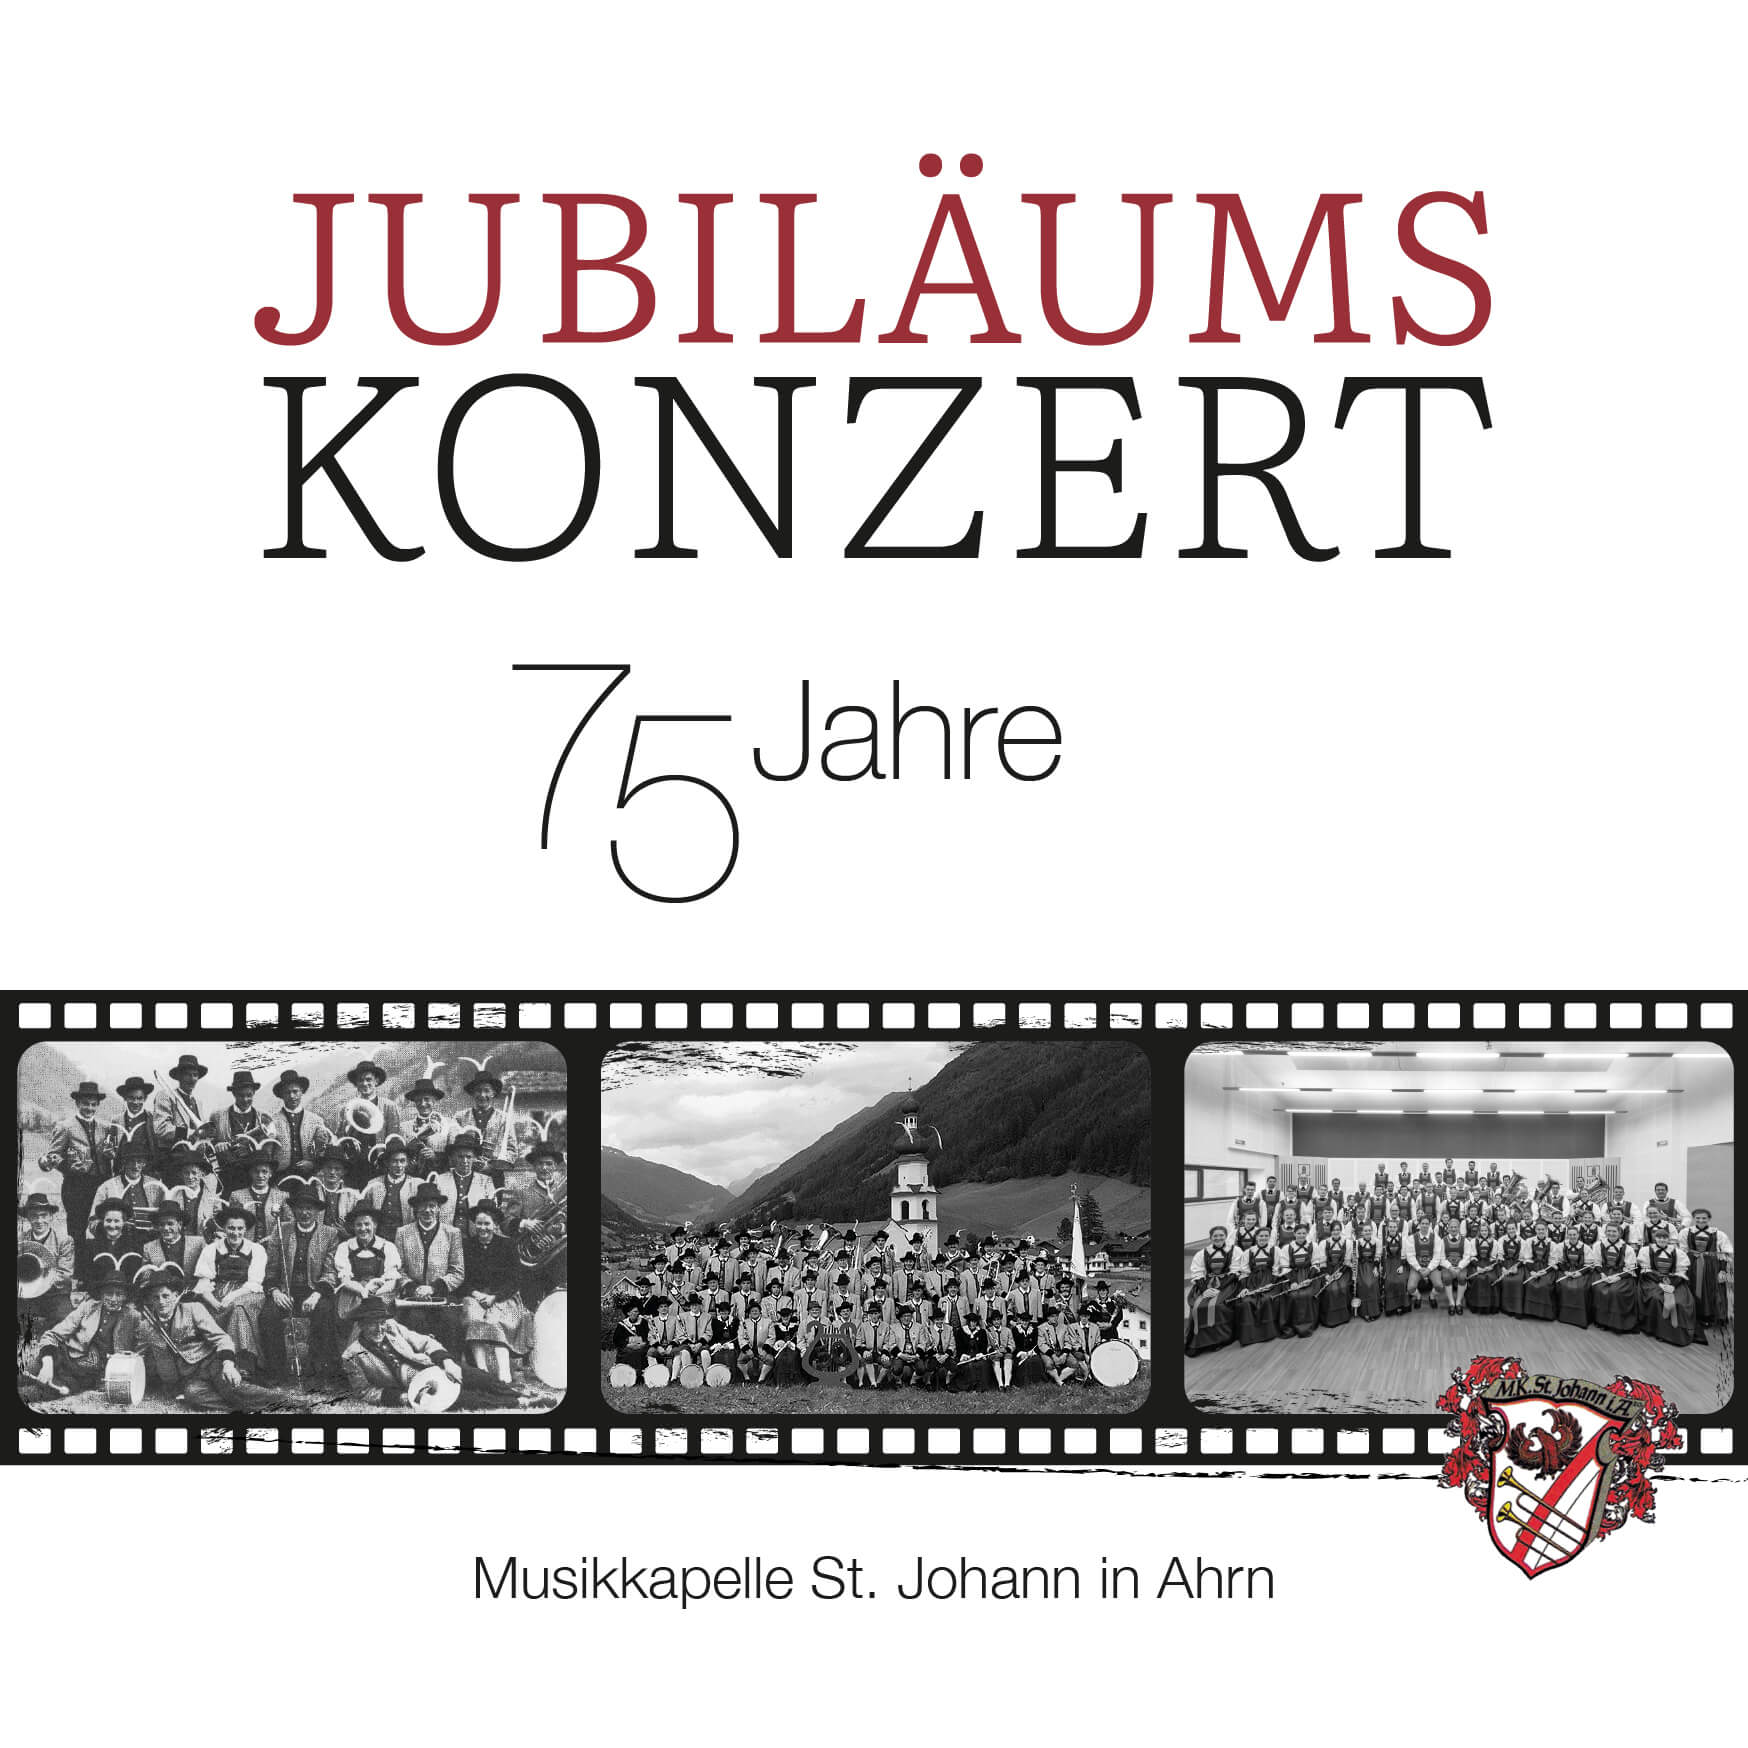 Jubiläumskonzert Einladung, 75-jähriges Jubiläum der Musikkapelle St. Johann in Ahrn